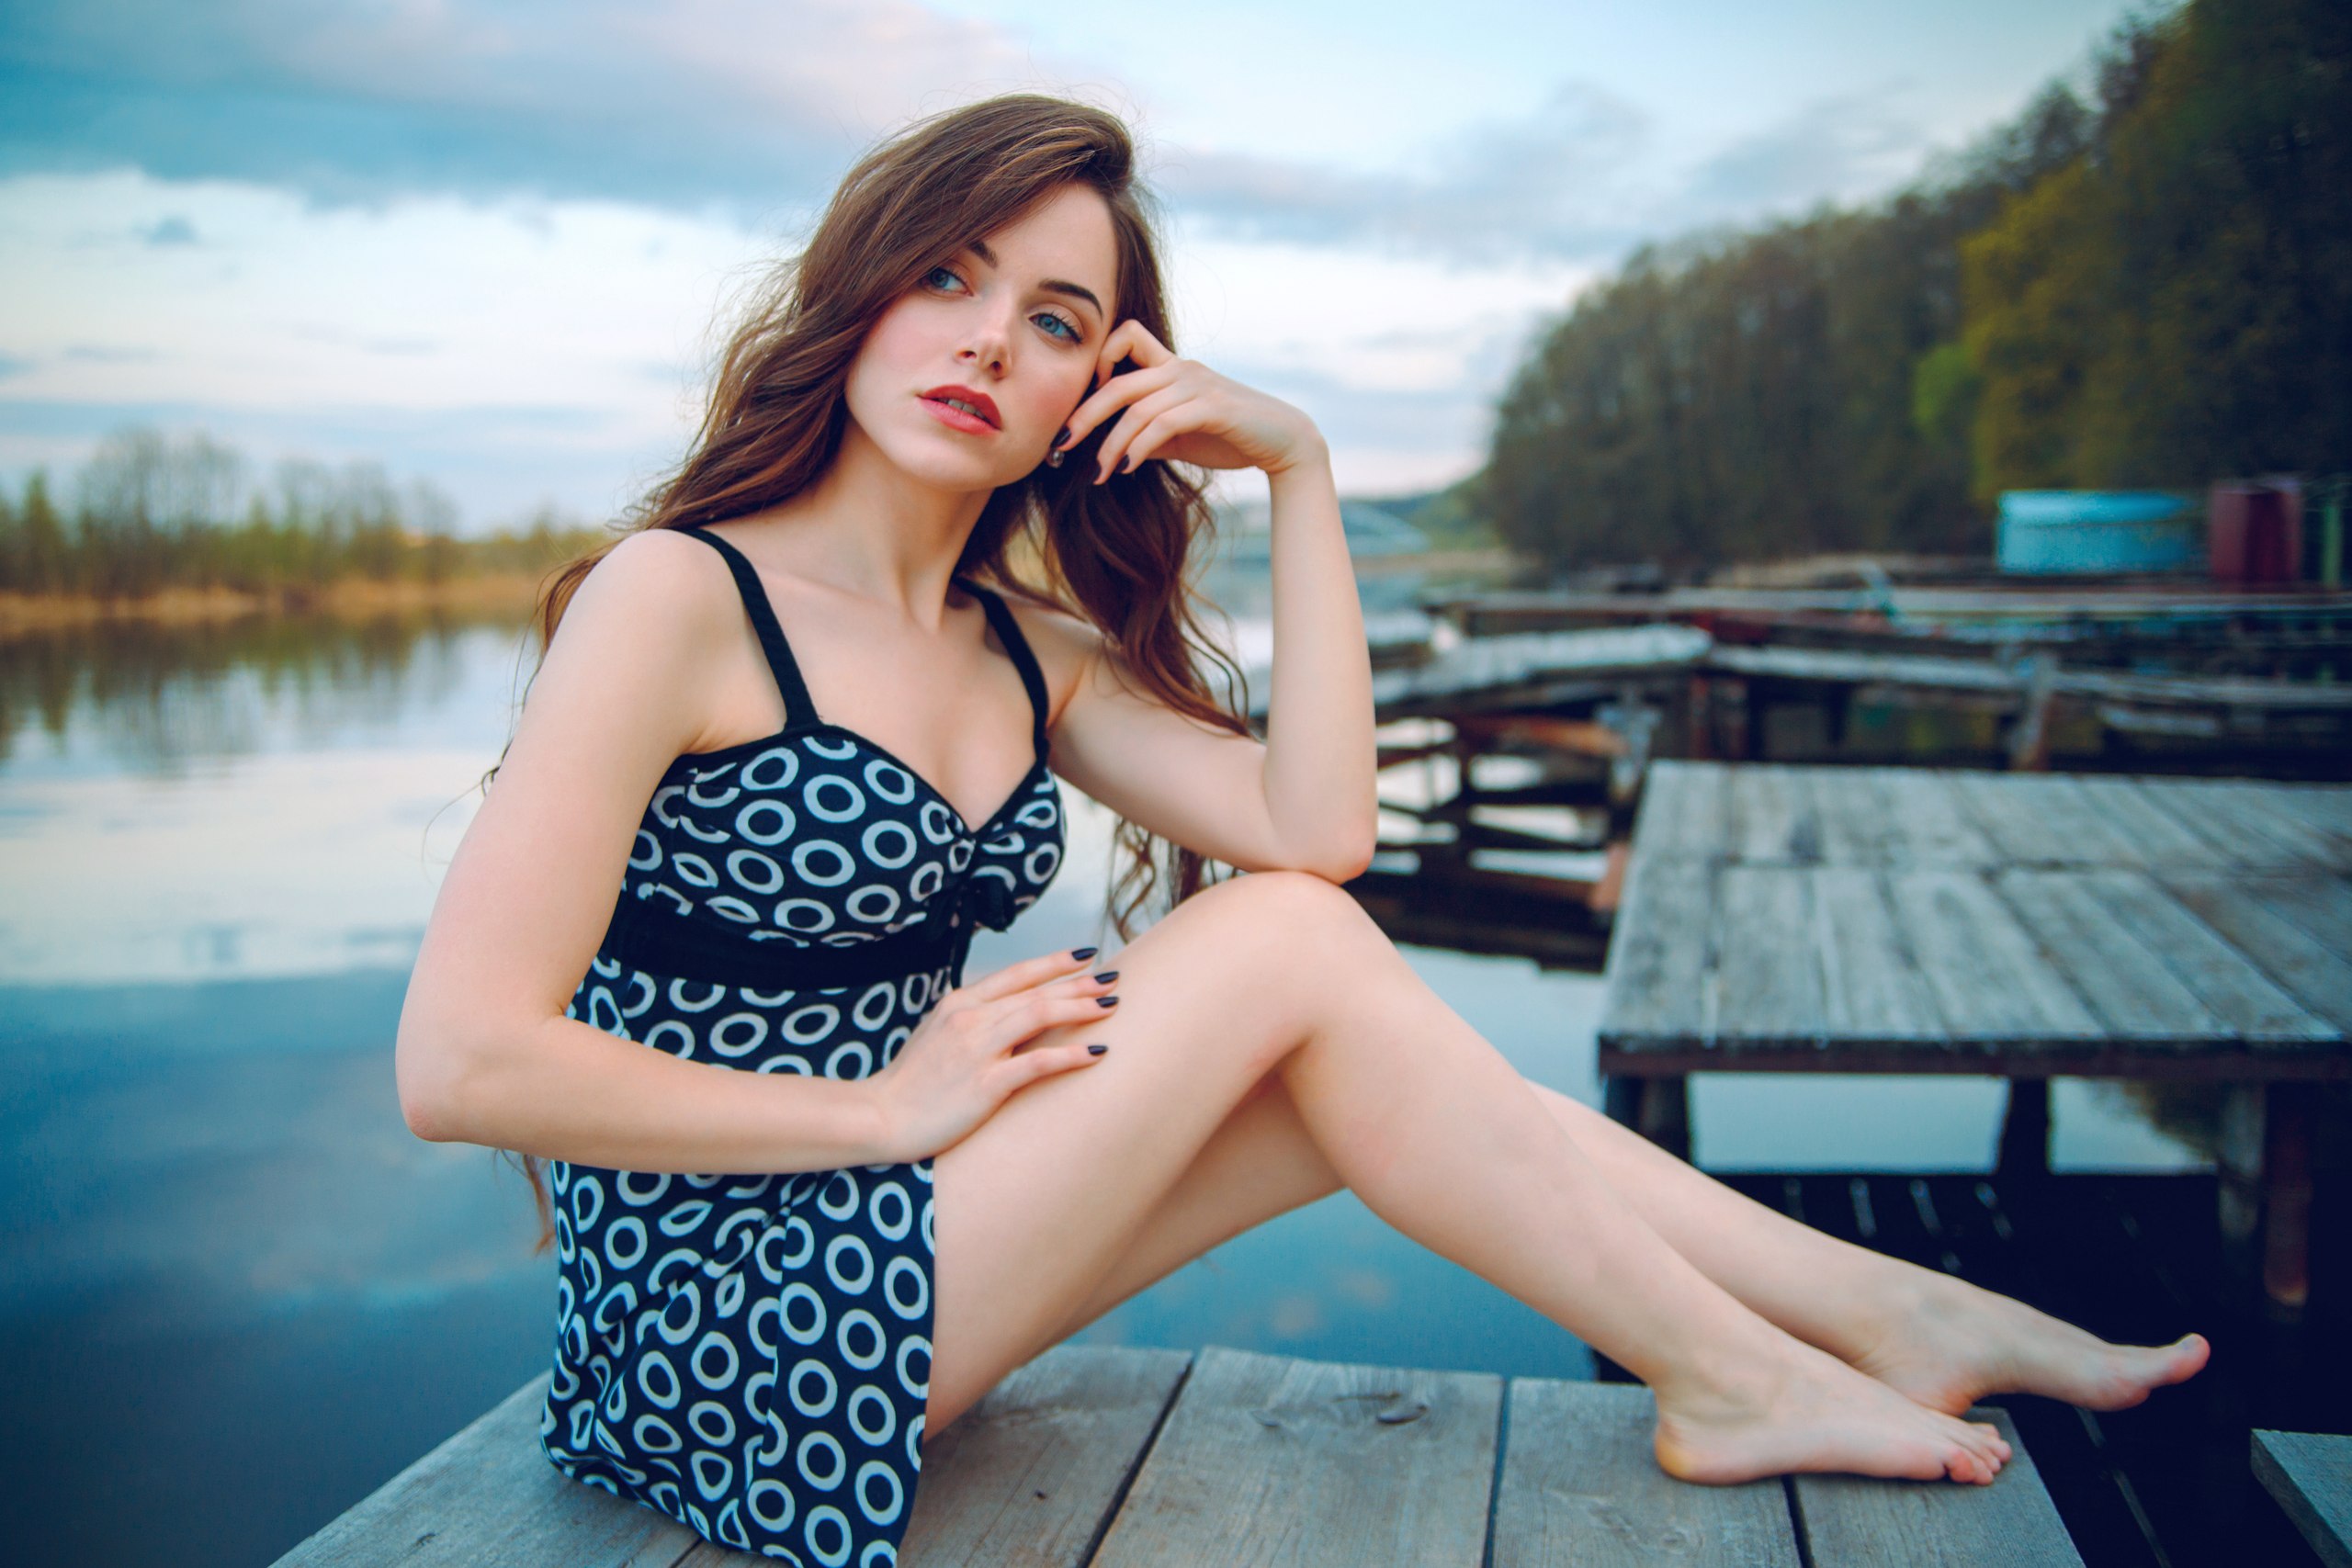 A girl in an evening dress sits on a wooden bridge